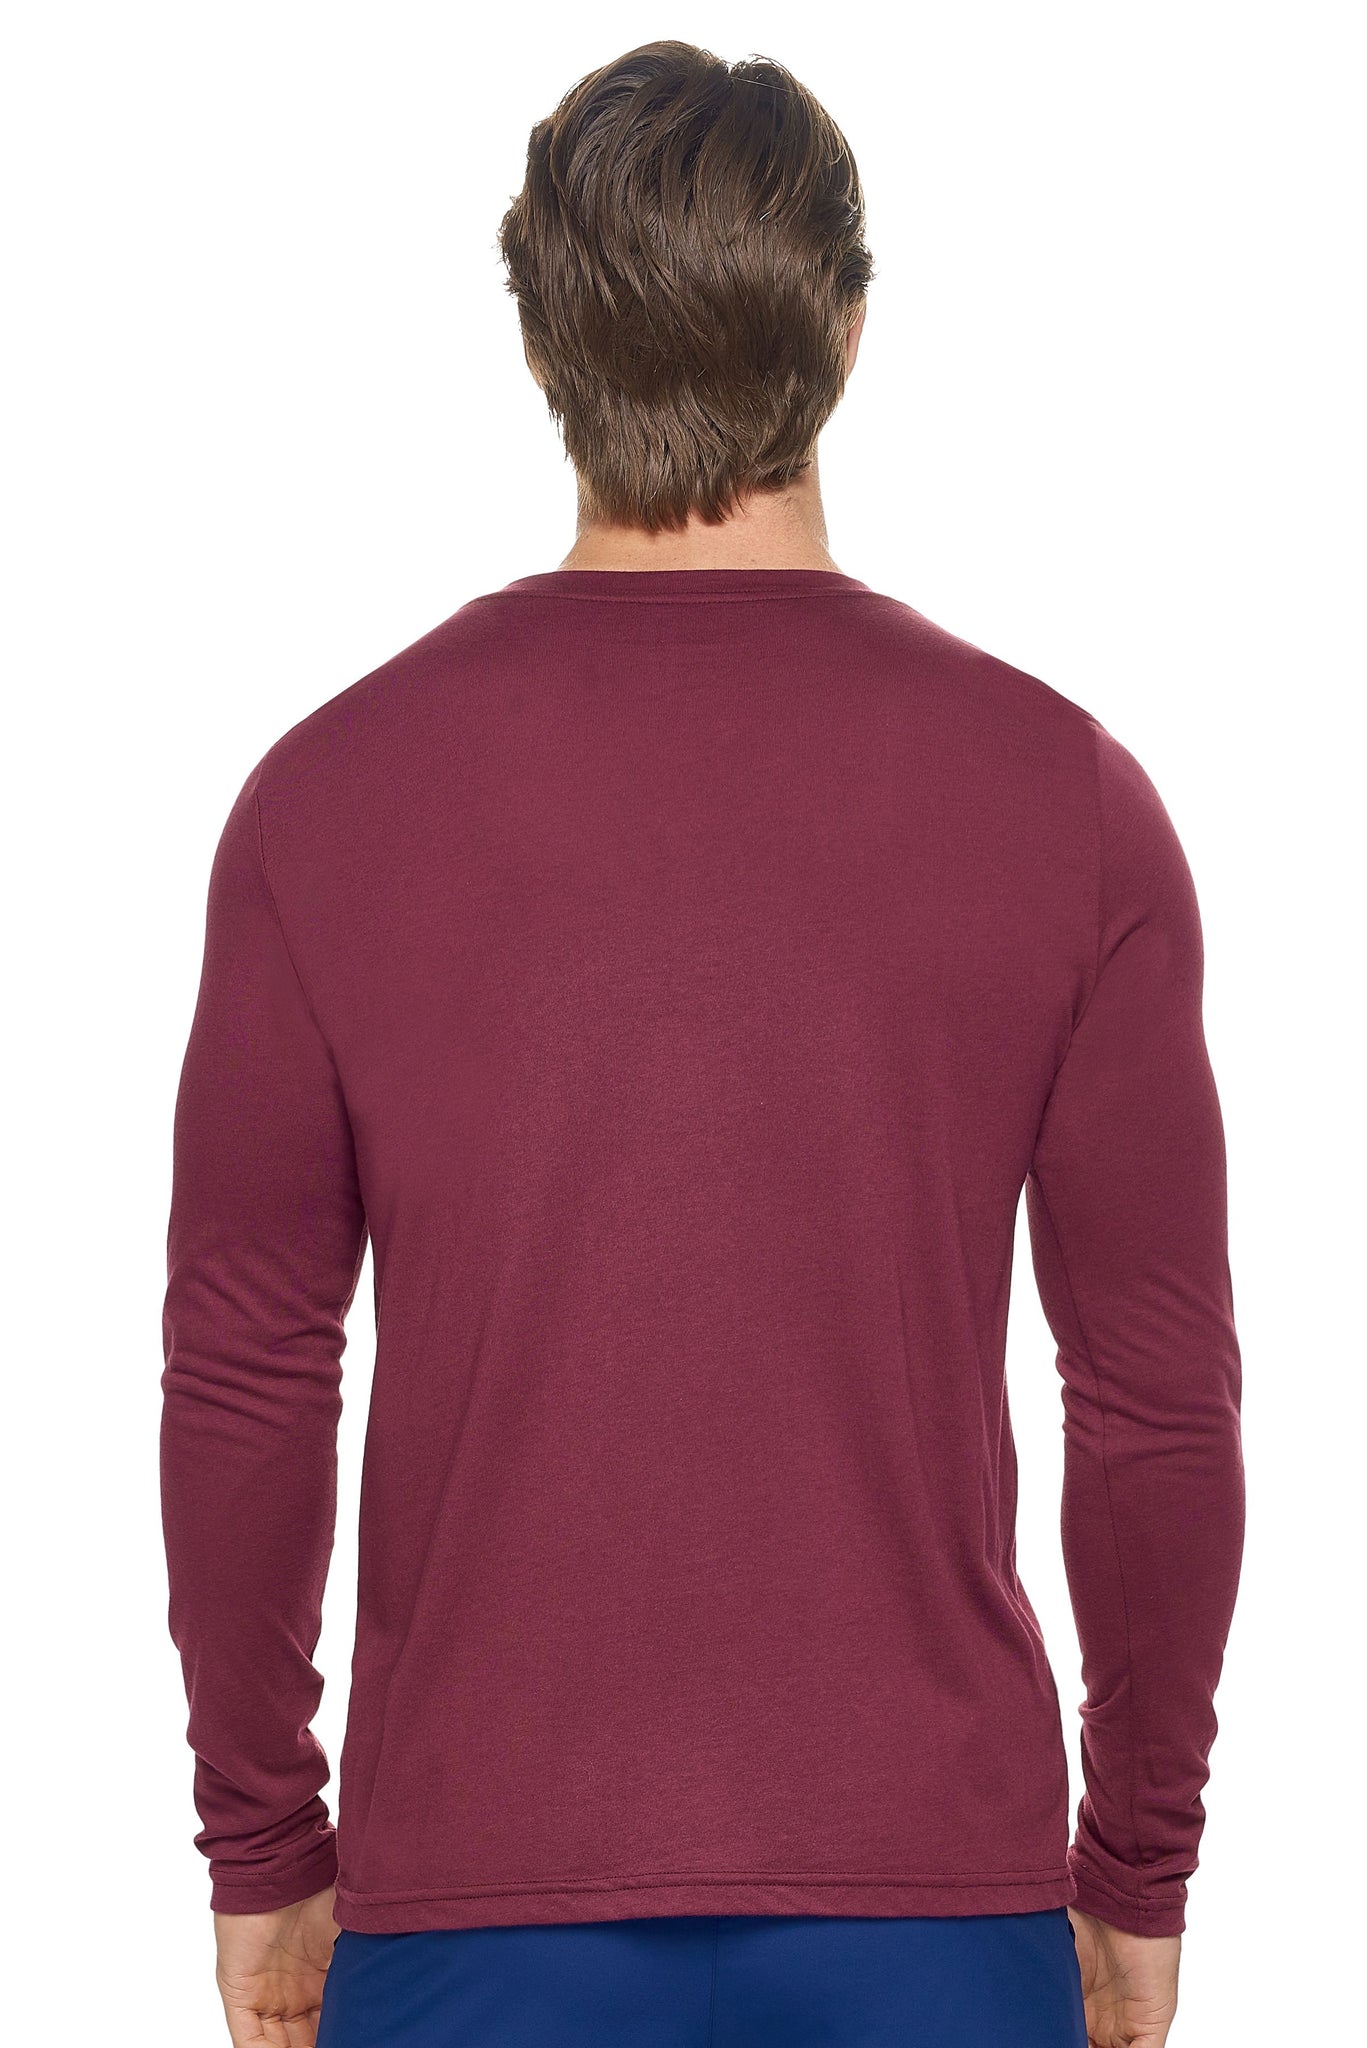 Expert Brand Wholesale Men's MoCA™ V-Neck Long Sleeve Tee in Maroon Image 3#maroon